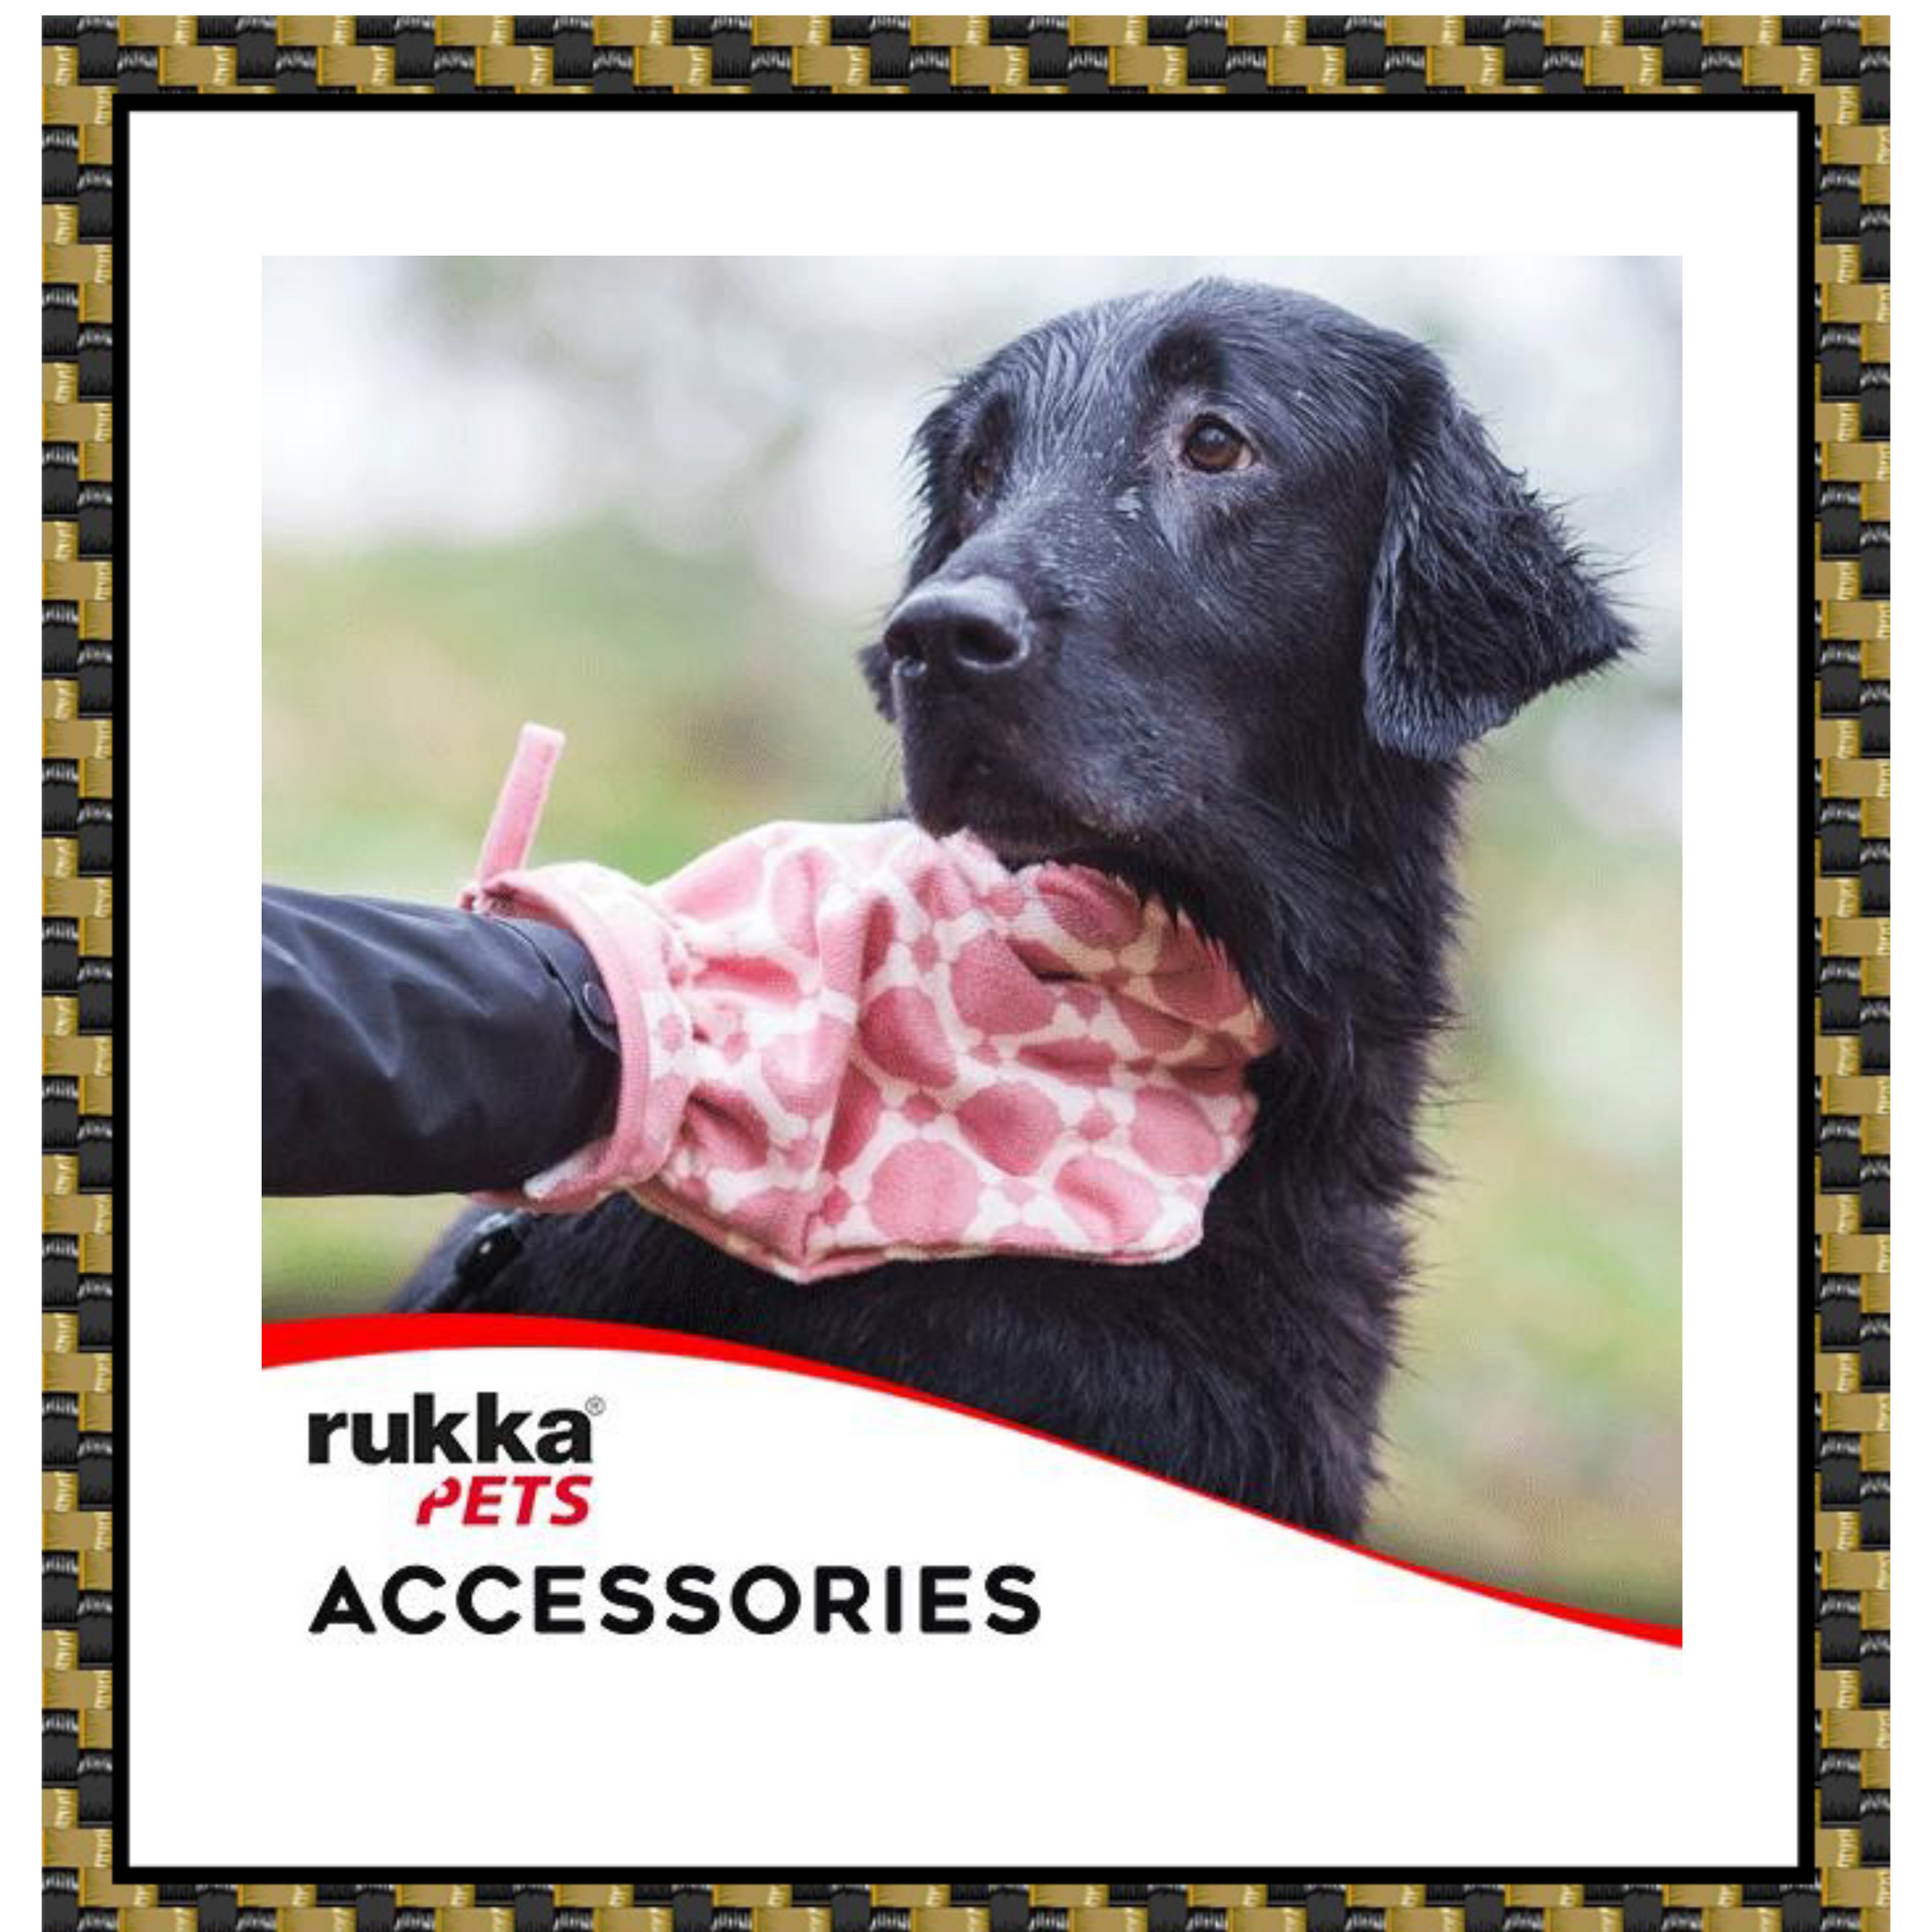 Rukka Pets Accessories